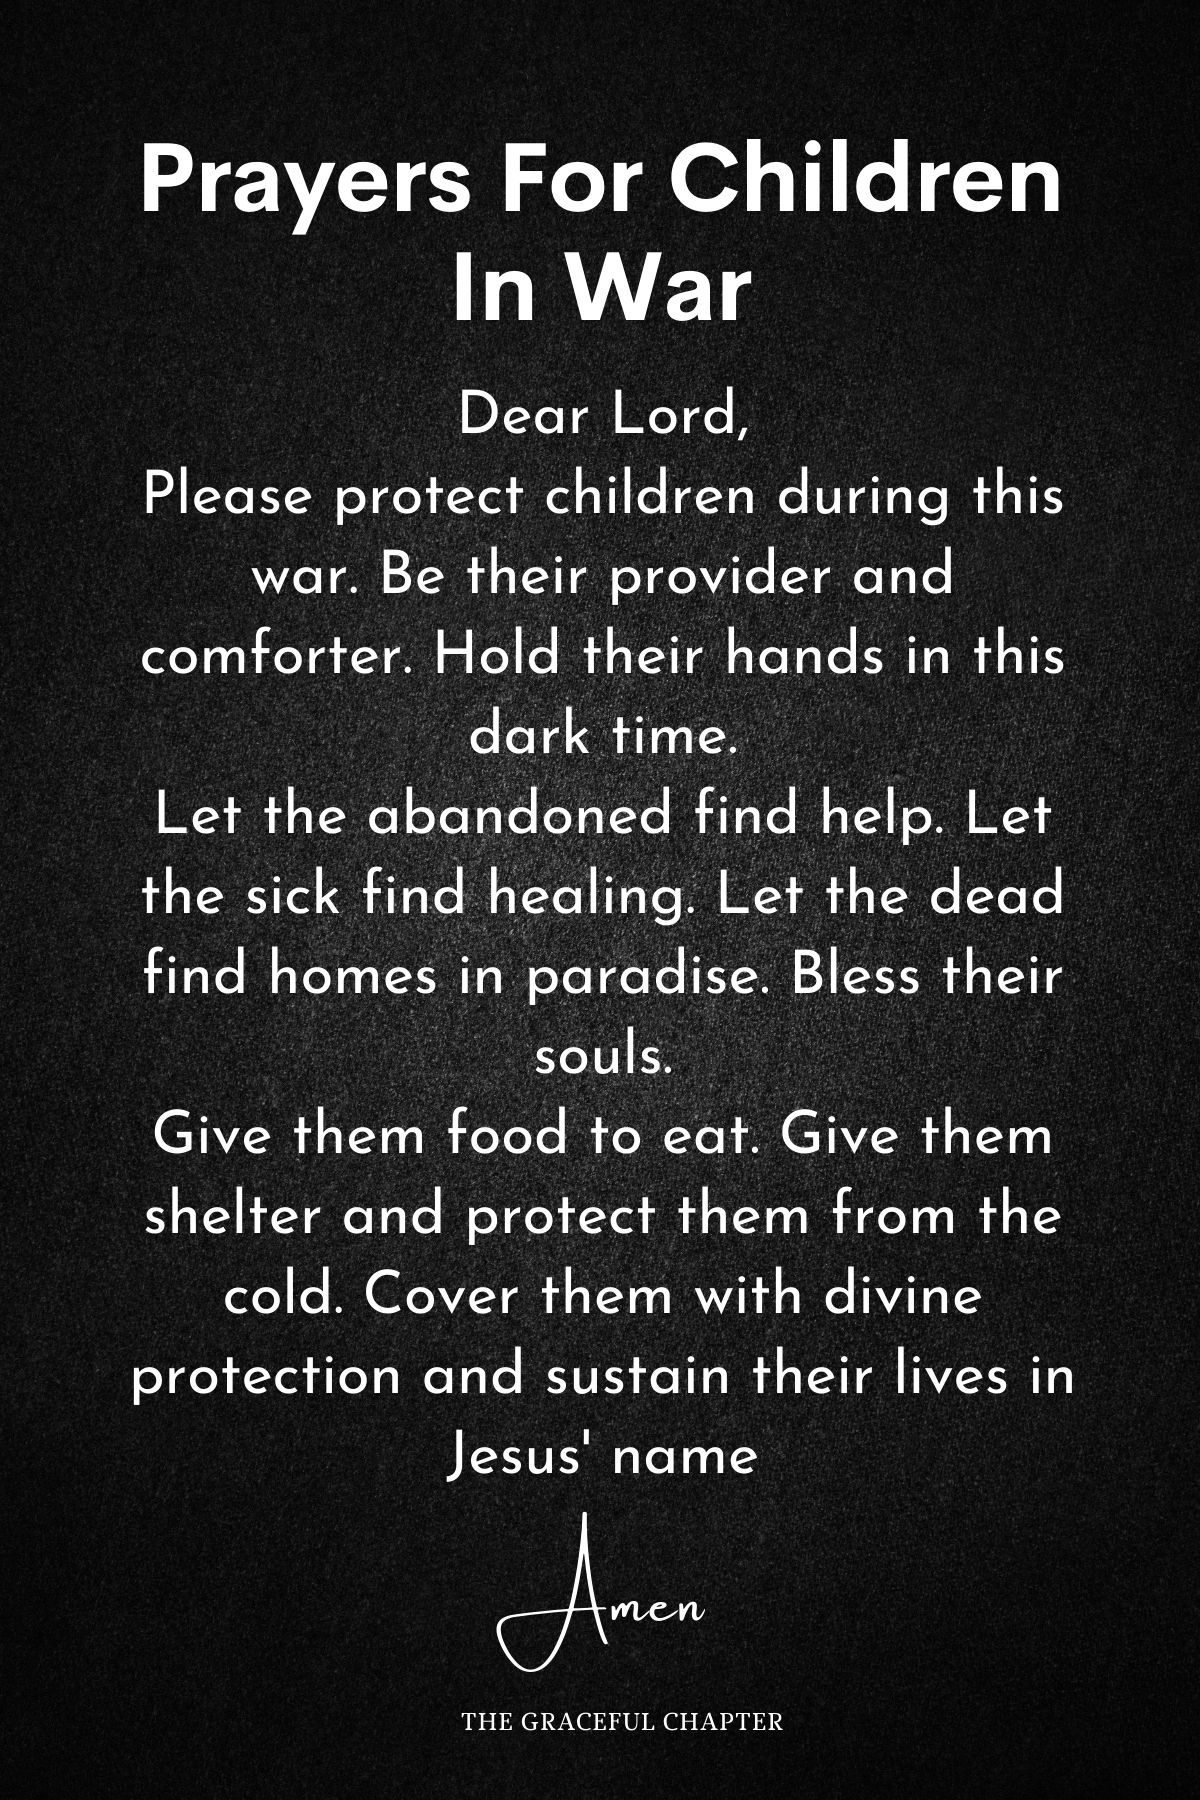 Prayers for children in war